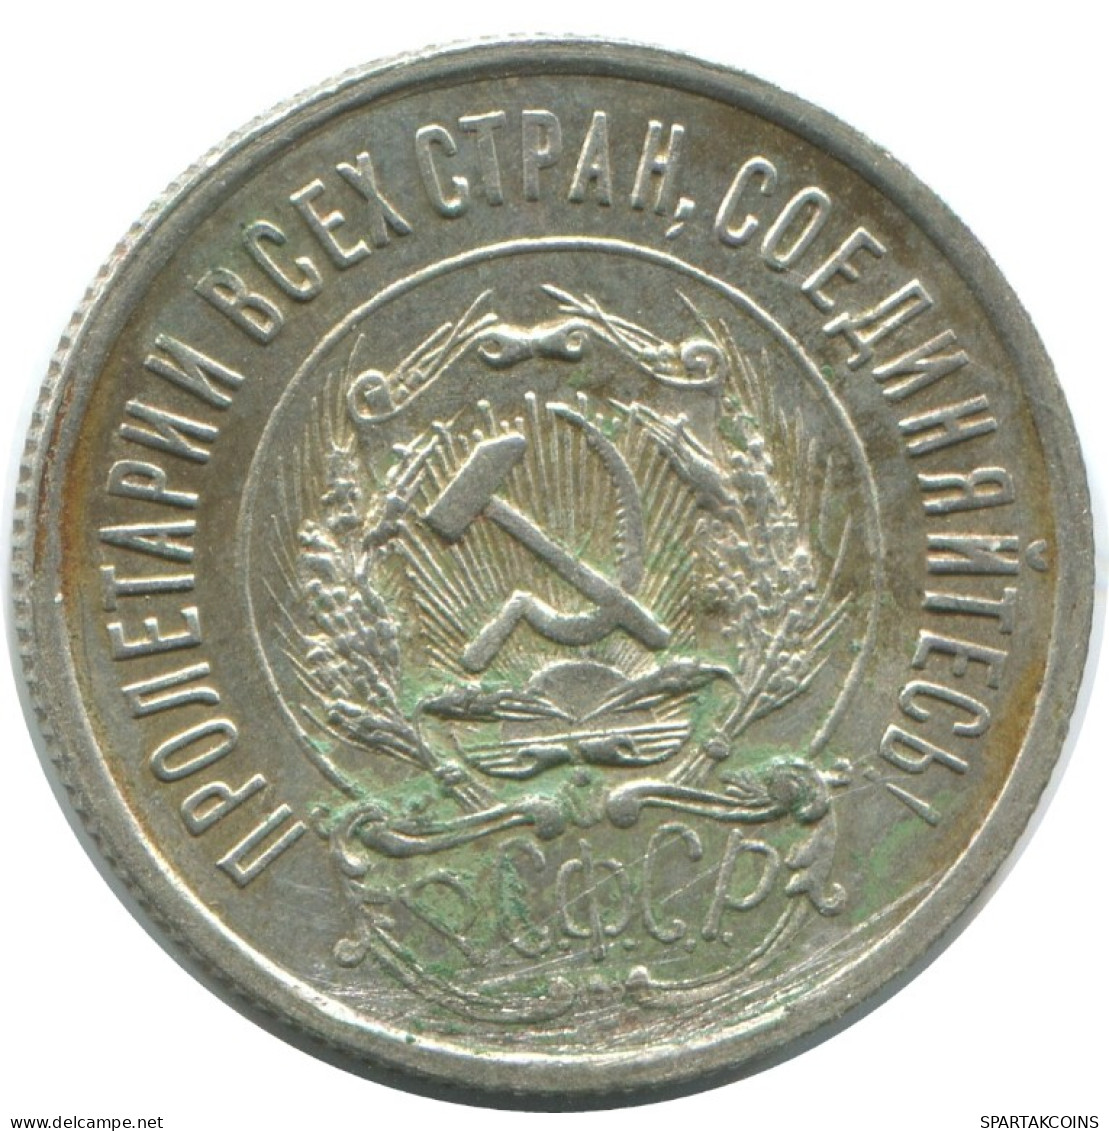 20 KOPEKS 1923 RUSSIA RSFSR SILVER Coin HIGH GRADE #AF455.4.U.A - Russie